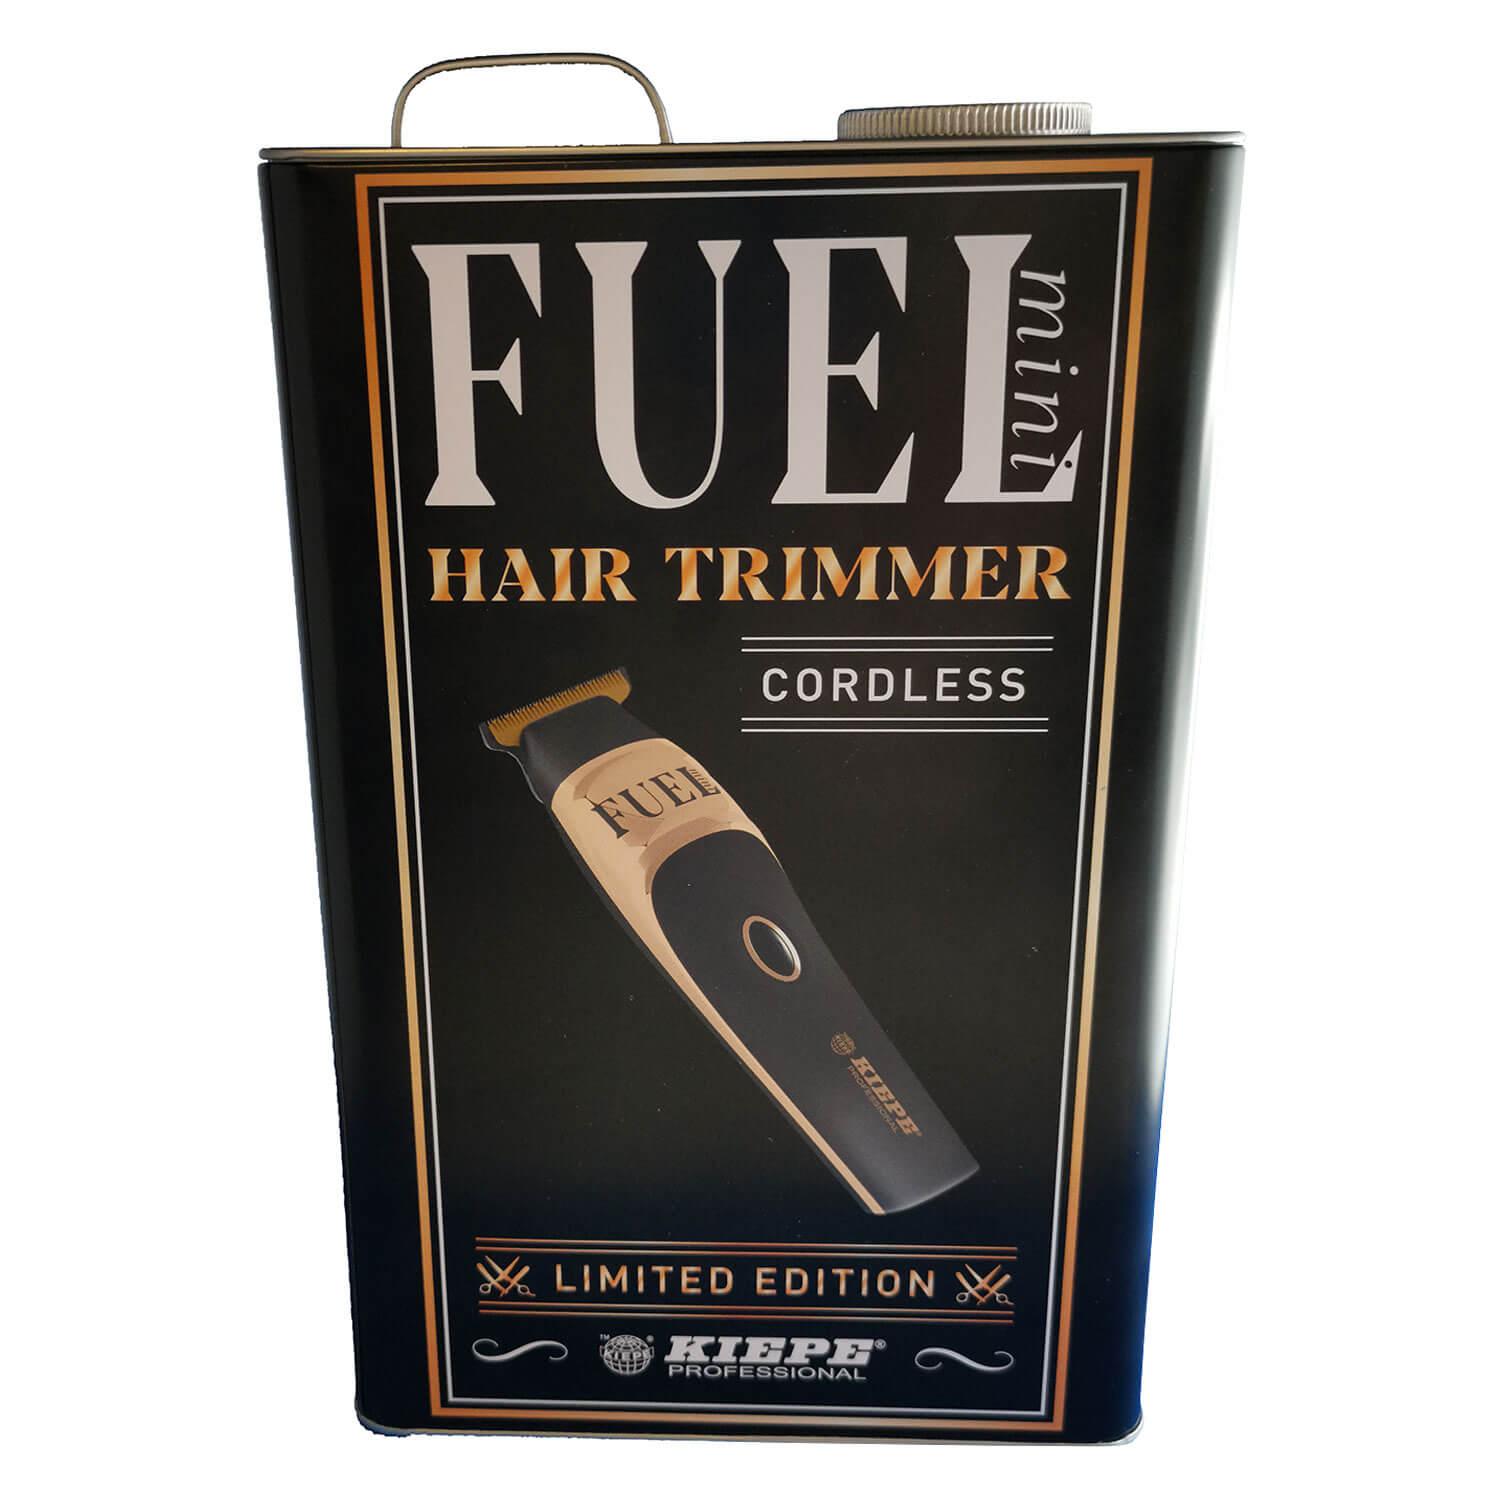 Kiepe - Fuel Mini Hair Trimmer